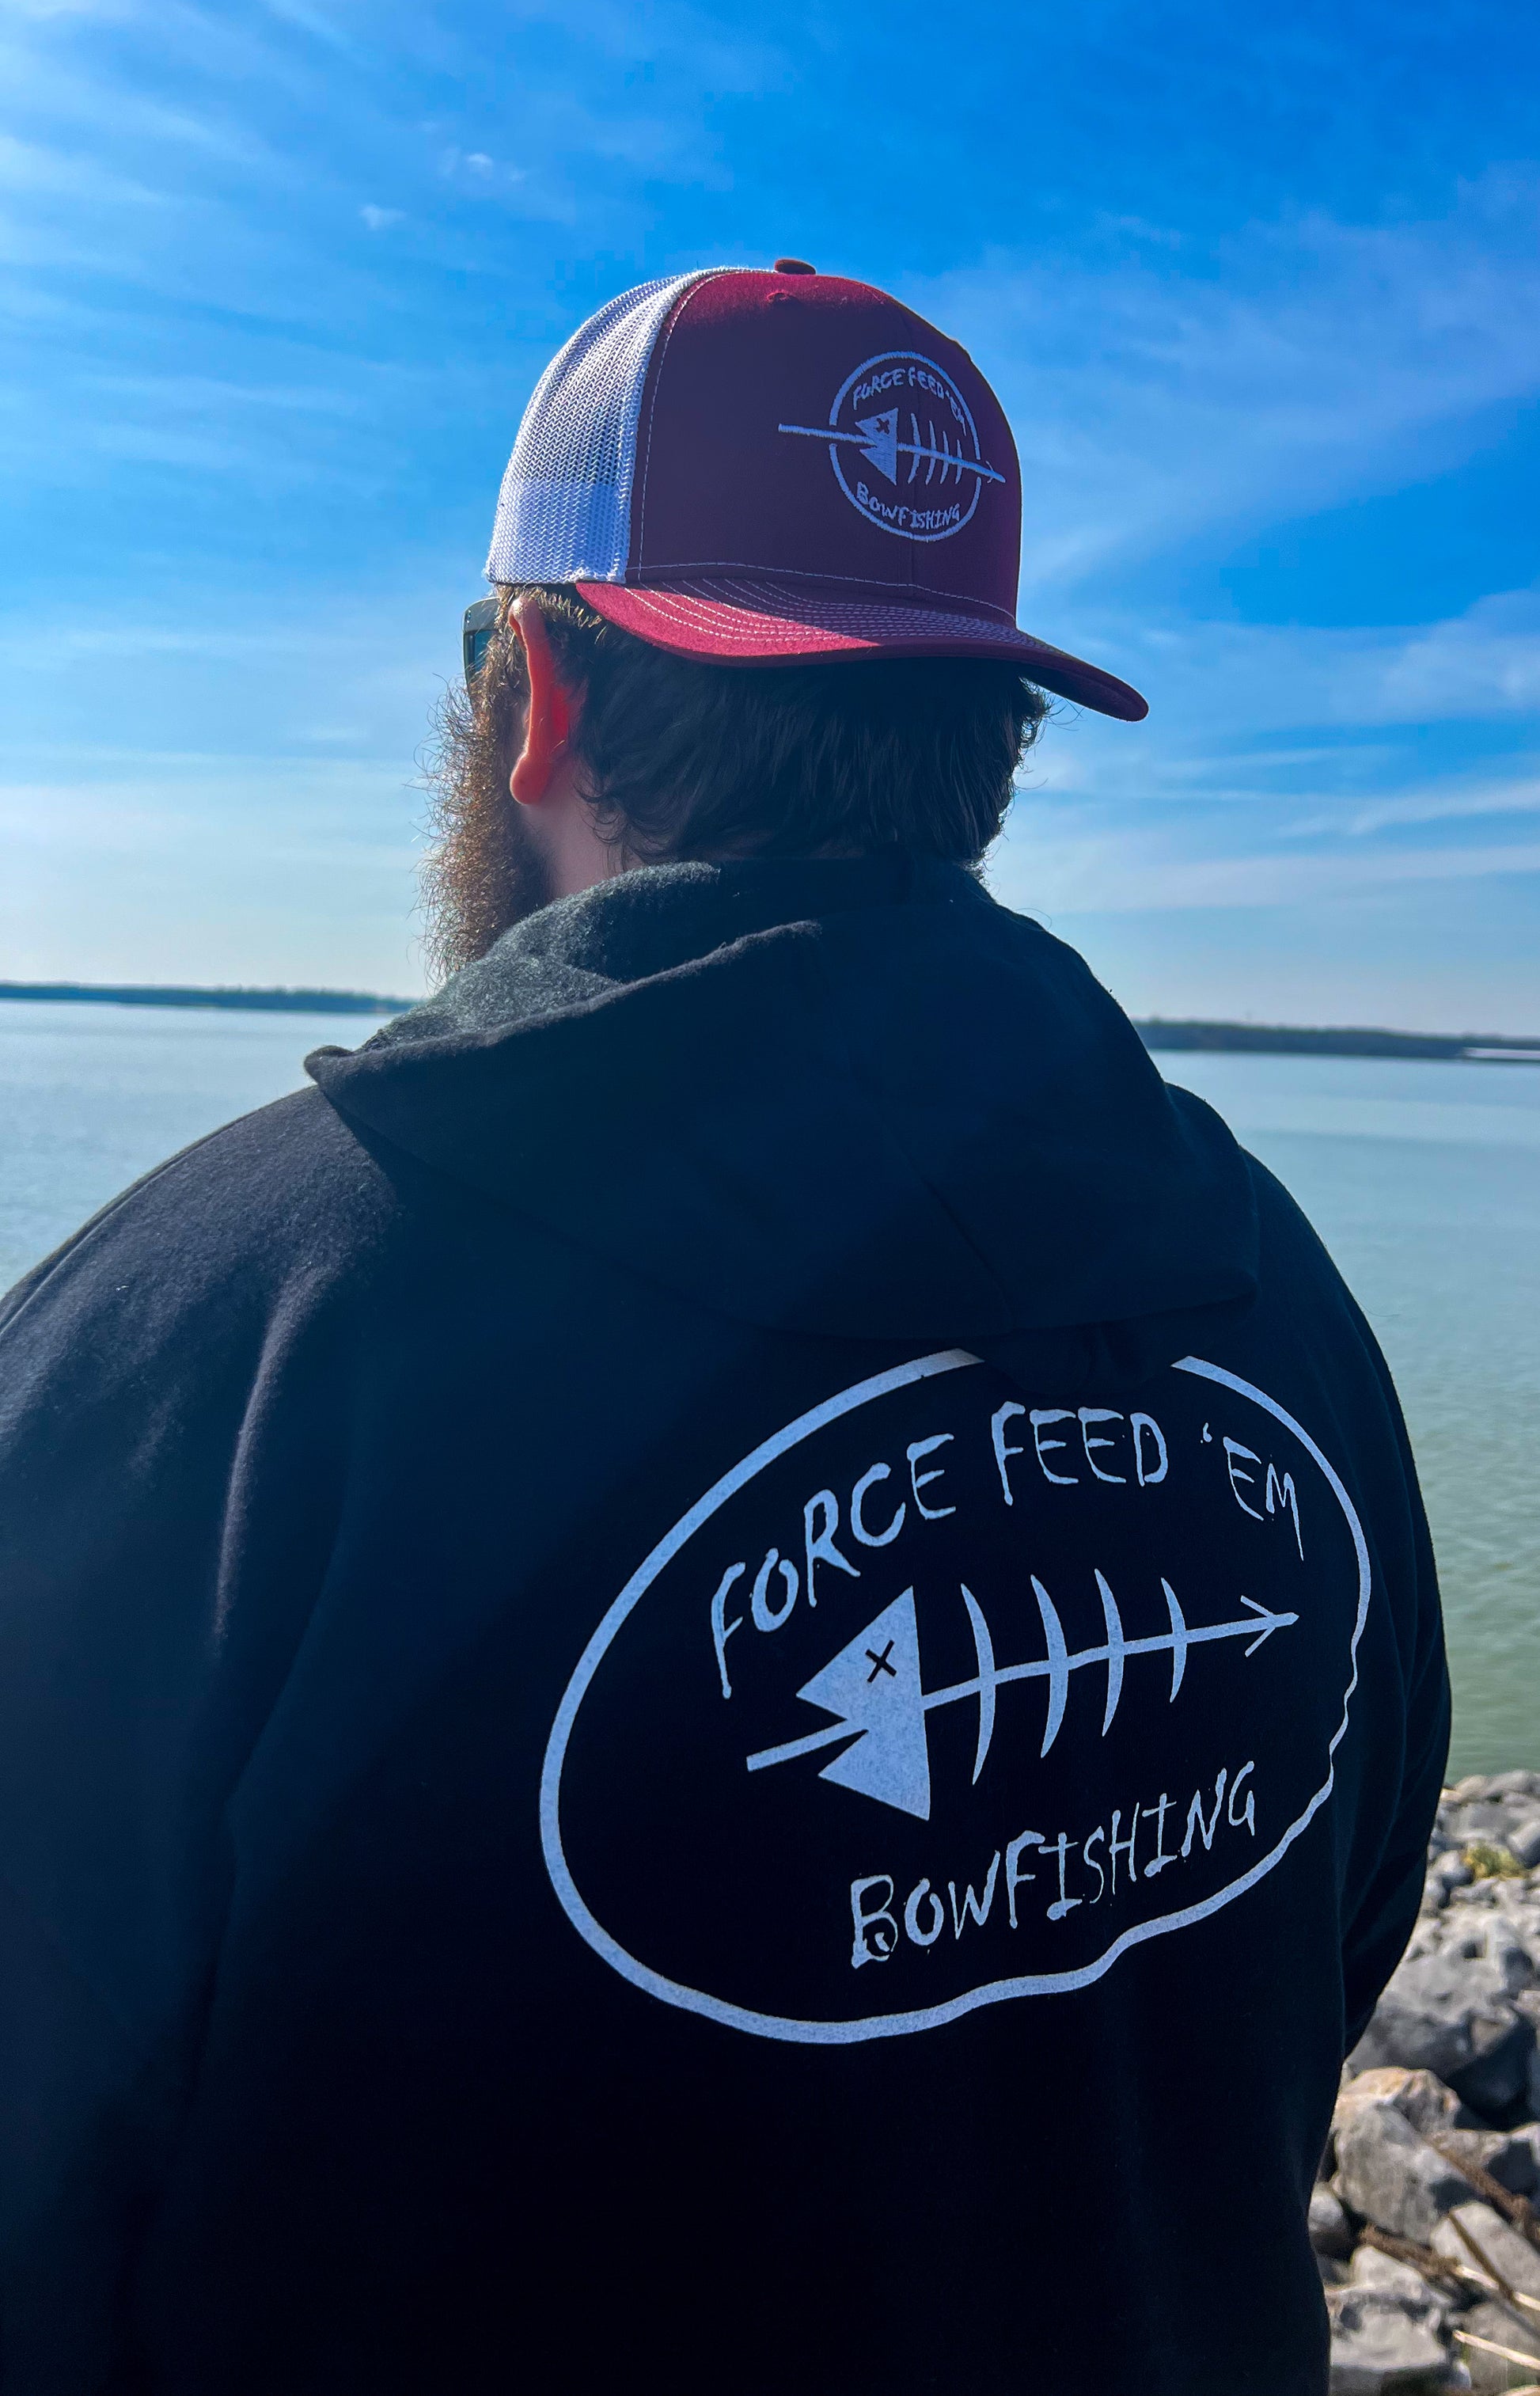 New Force Feed’em Bowfishing Hoodie - Force Feed'em Bowfishing